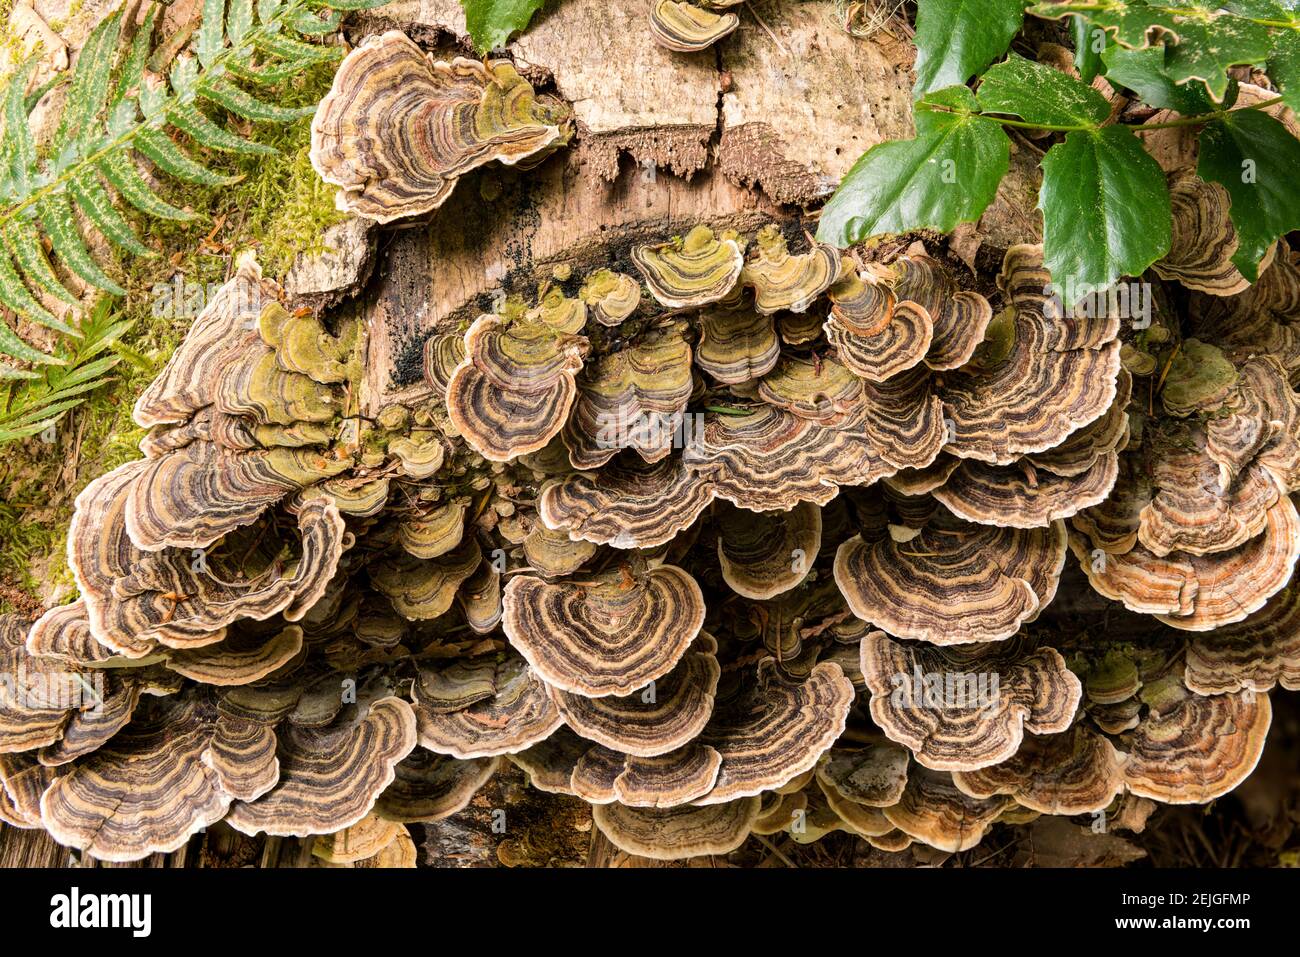 Fungus growing on fallen tree in rainforest Stock Photo